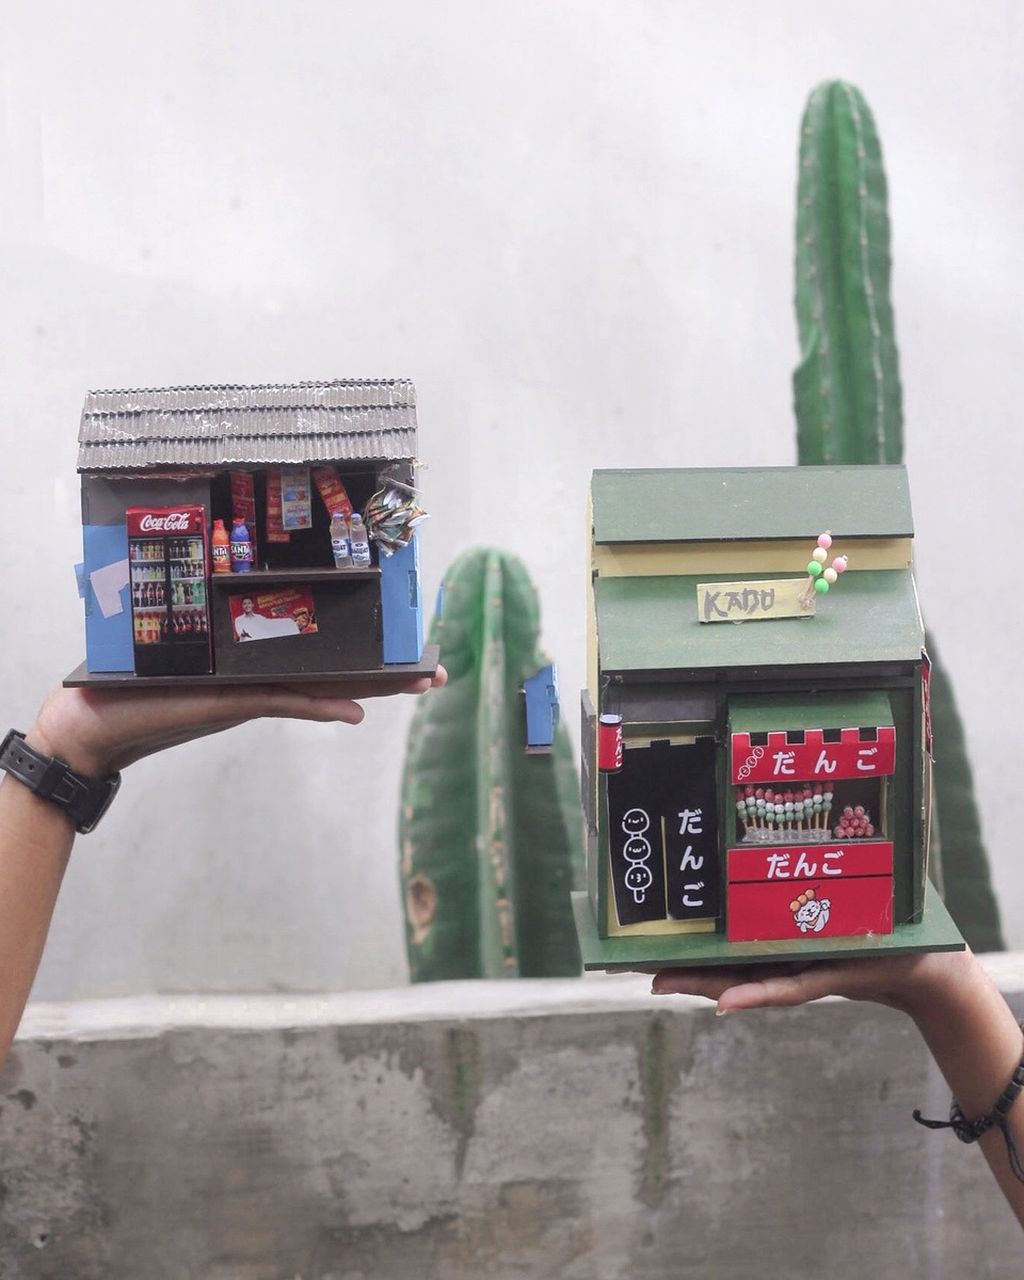 Permainan miniatur bangunan toko kelontong Indonesia dan Jepang yang bernama Ka.Do diciptakan oleh Elke Santa Amesa, mahasiswa Universitas Kristen Duta Wacana Yogyakarta. 